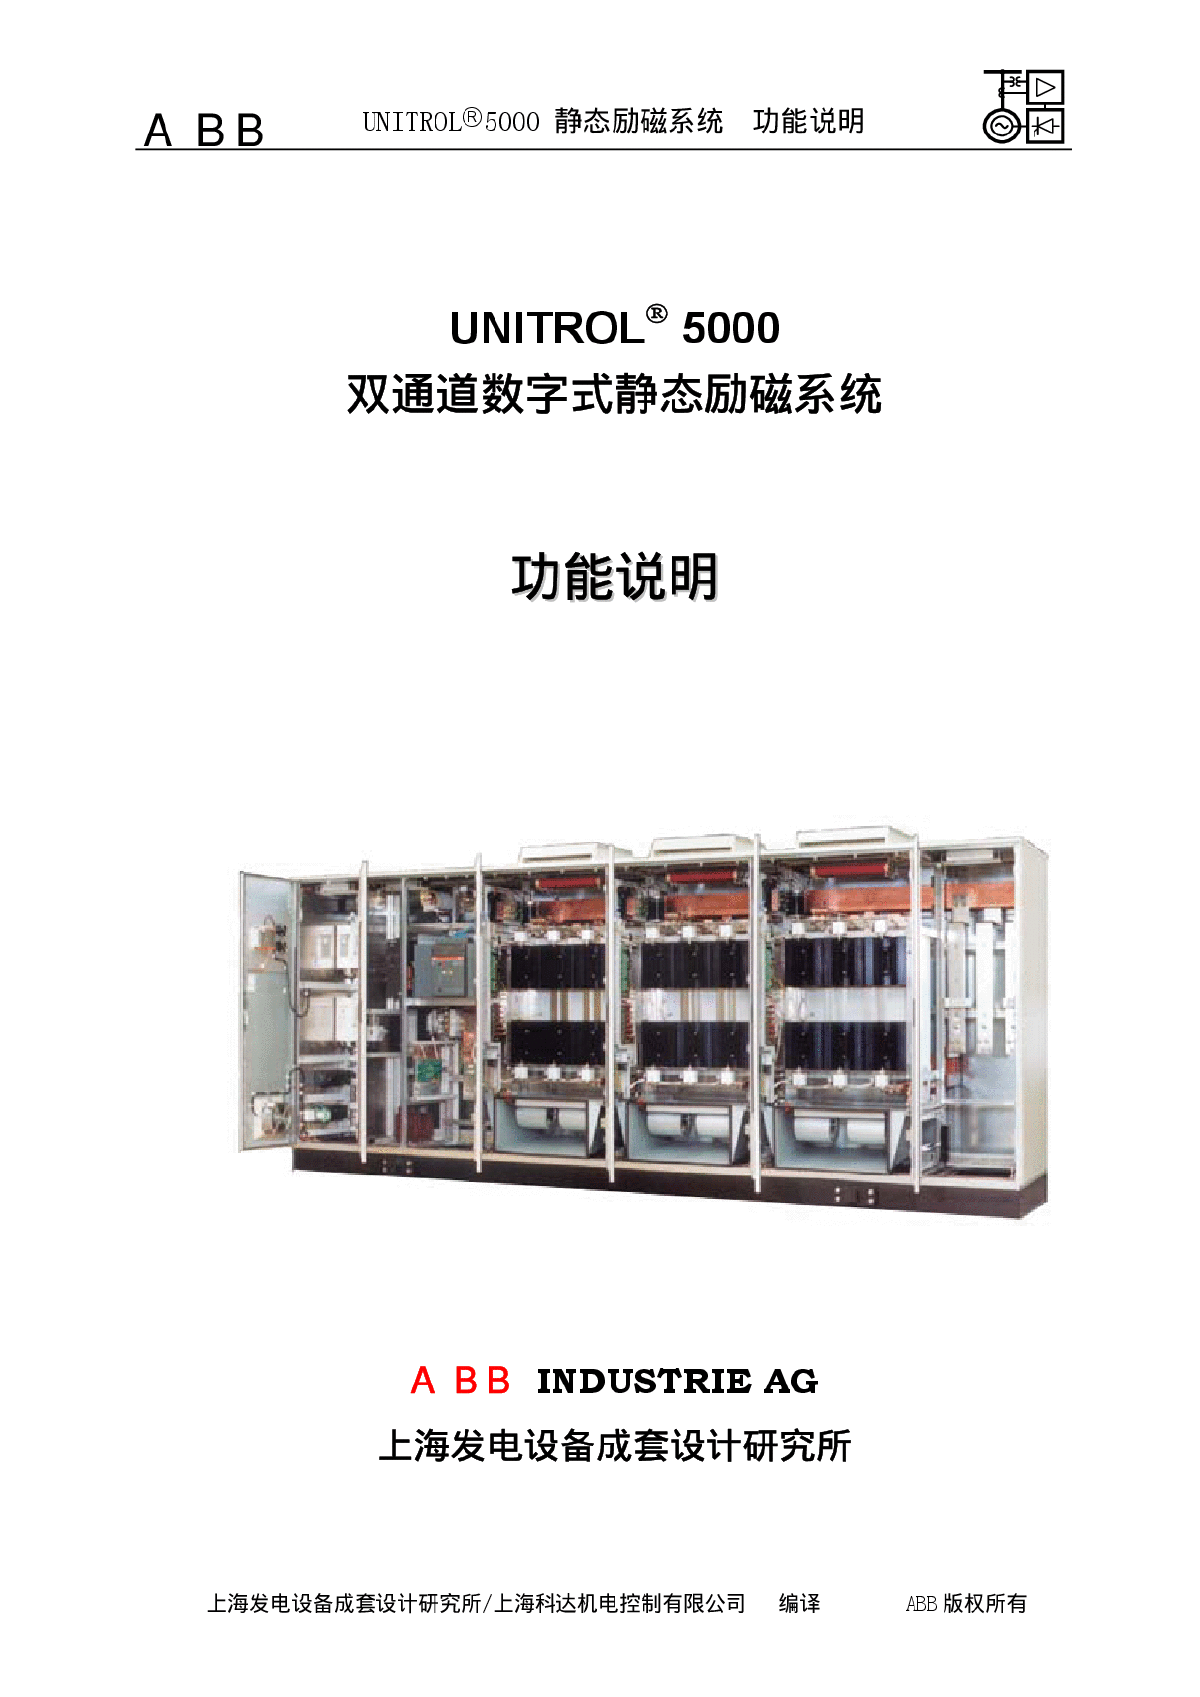 ABB Unitrol5000 功能说明